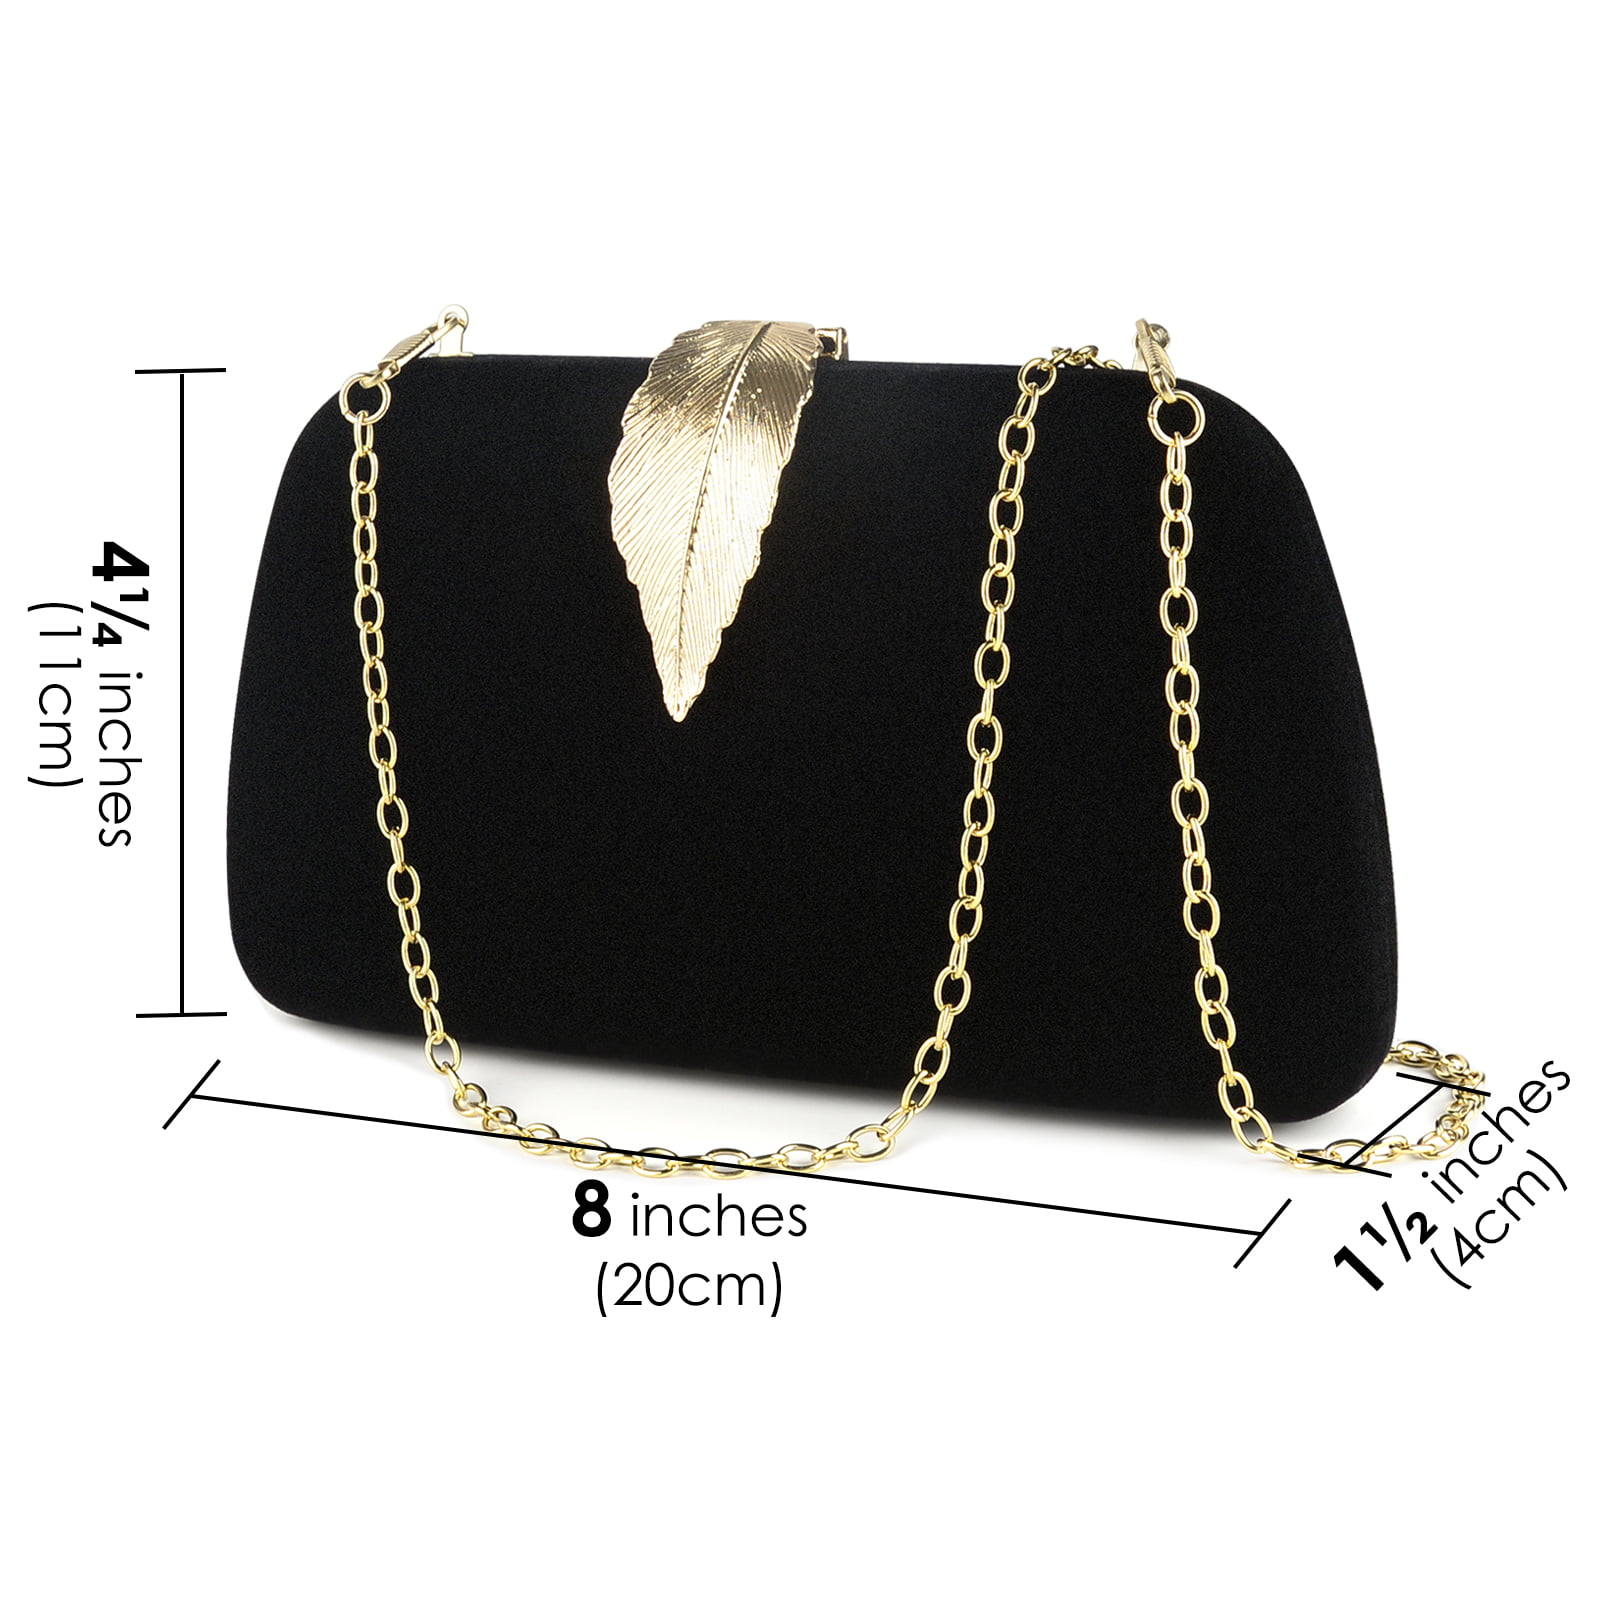 Womens Black Leather Chain Clutch Evening Party Wallet Purses Shoulder Handbag 